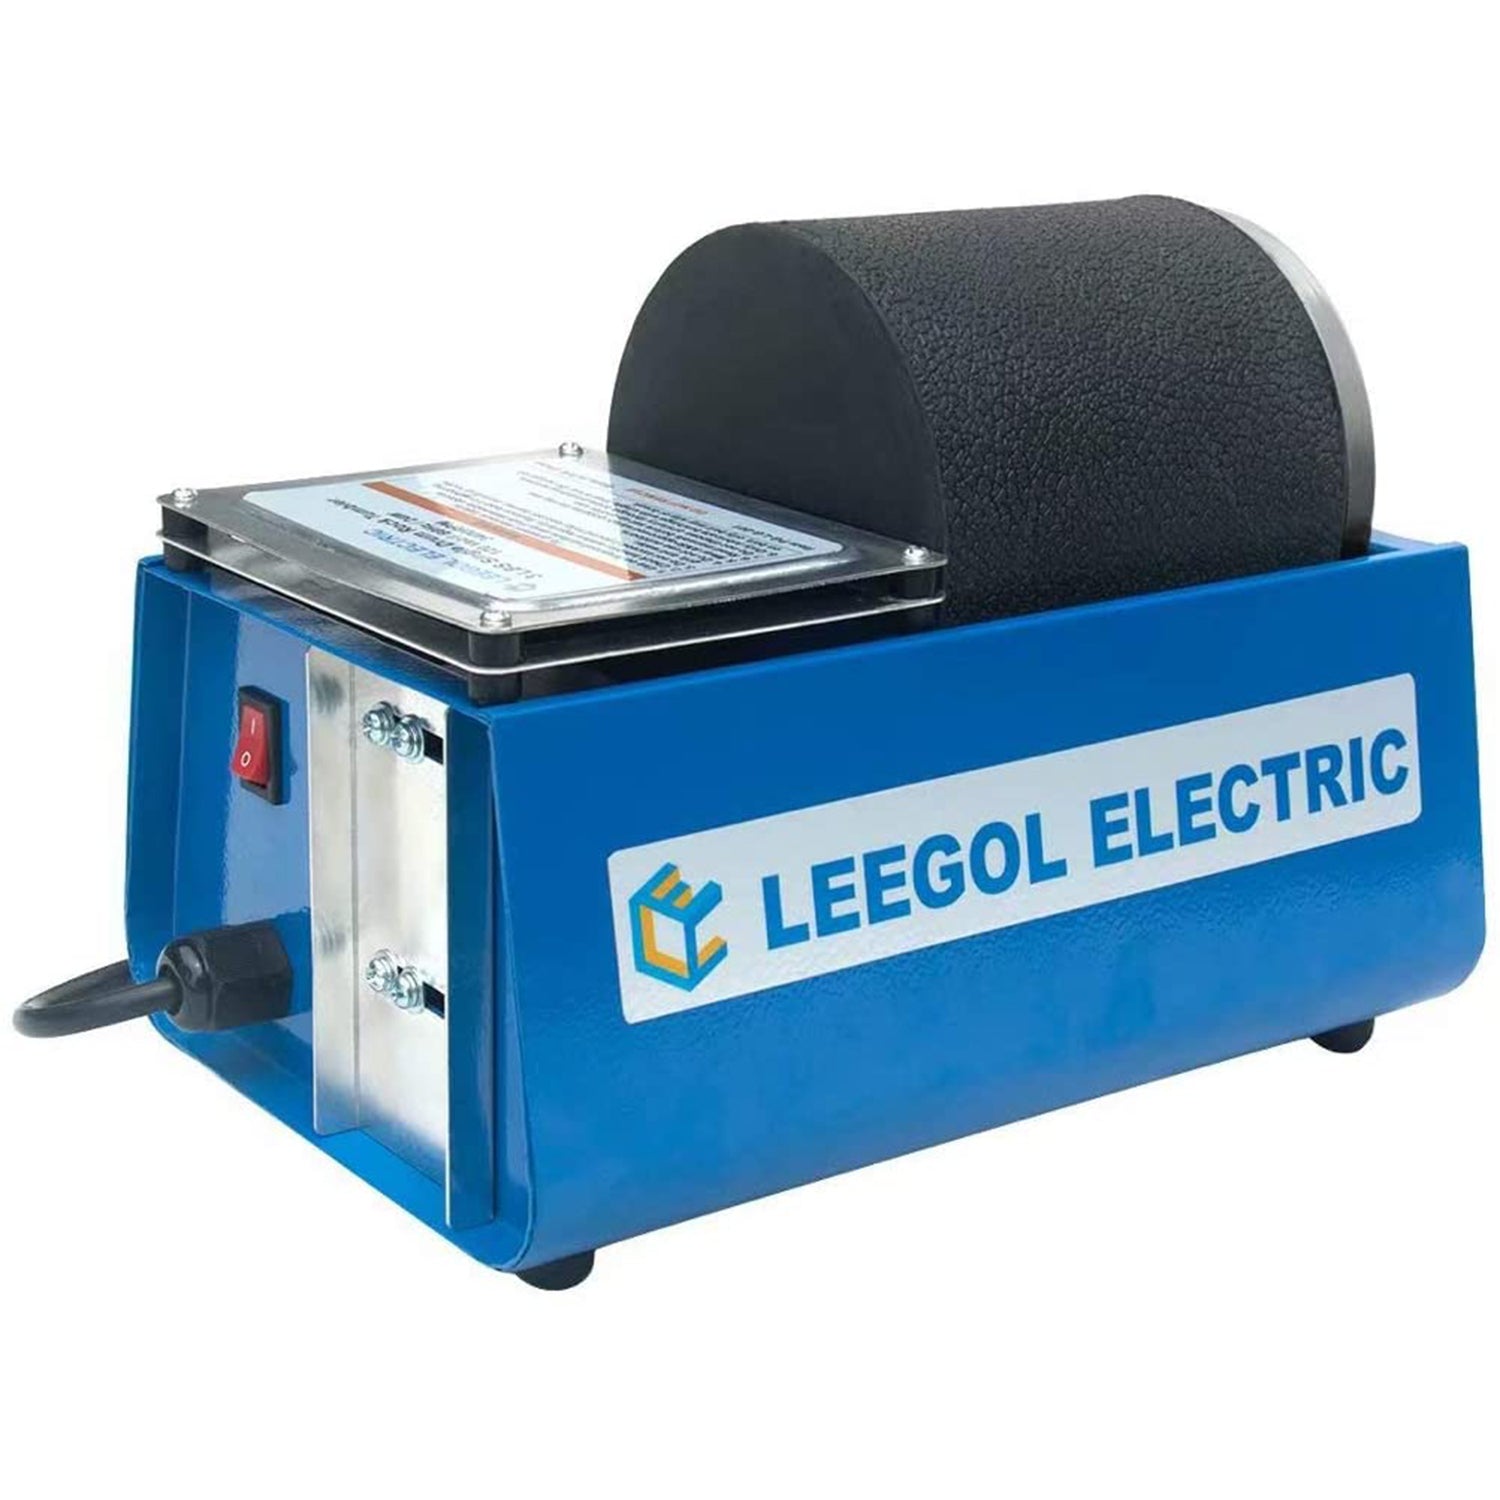 Leegol Electric 5LB Vibratory Tumbler Bowl Tumbling Polishing Machine -  Polishing Small Metal Parts